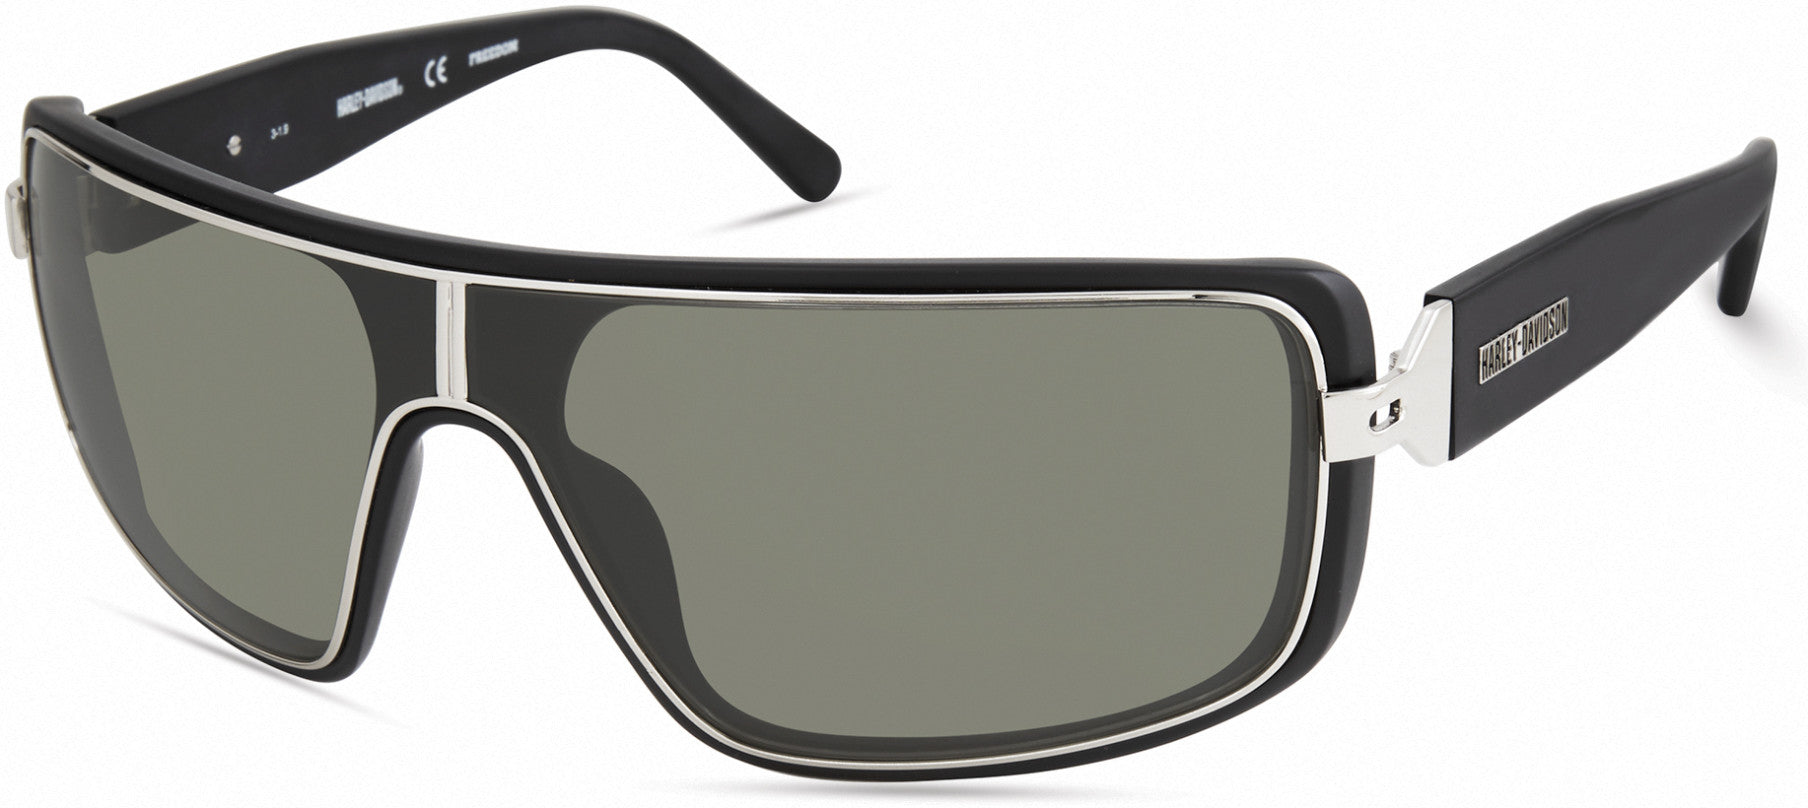 Harley-Davidson HD1000X Shield Sunglasses 02N-02N - Matte Black / Green